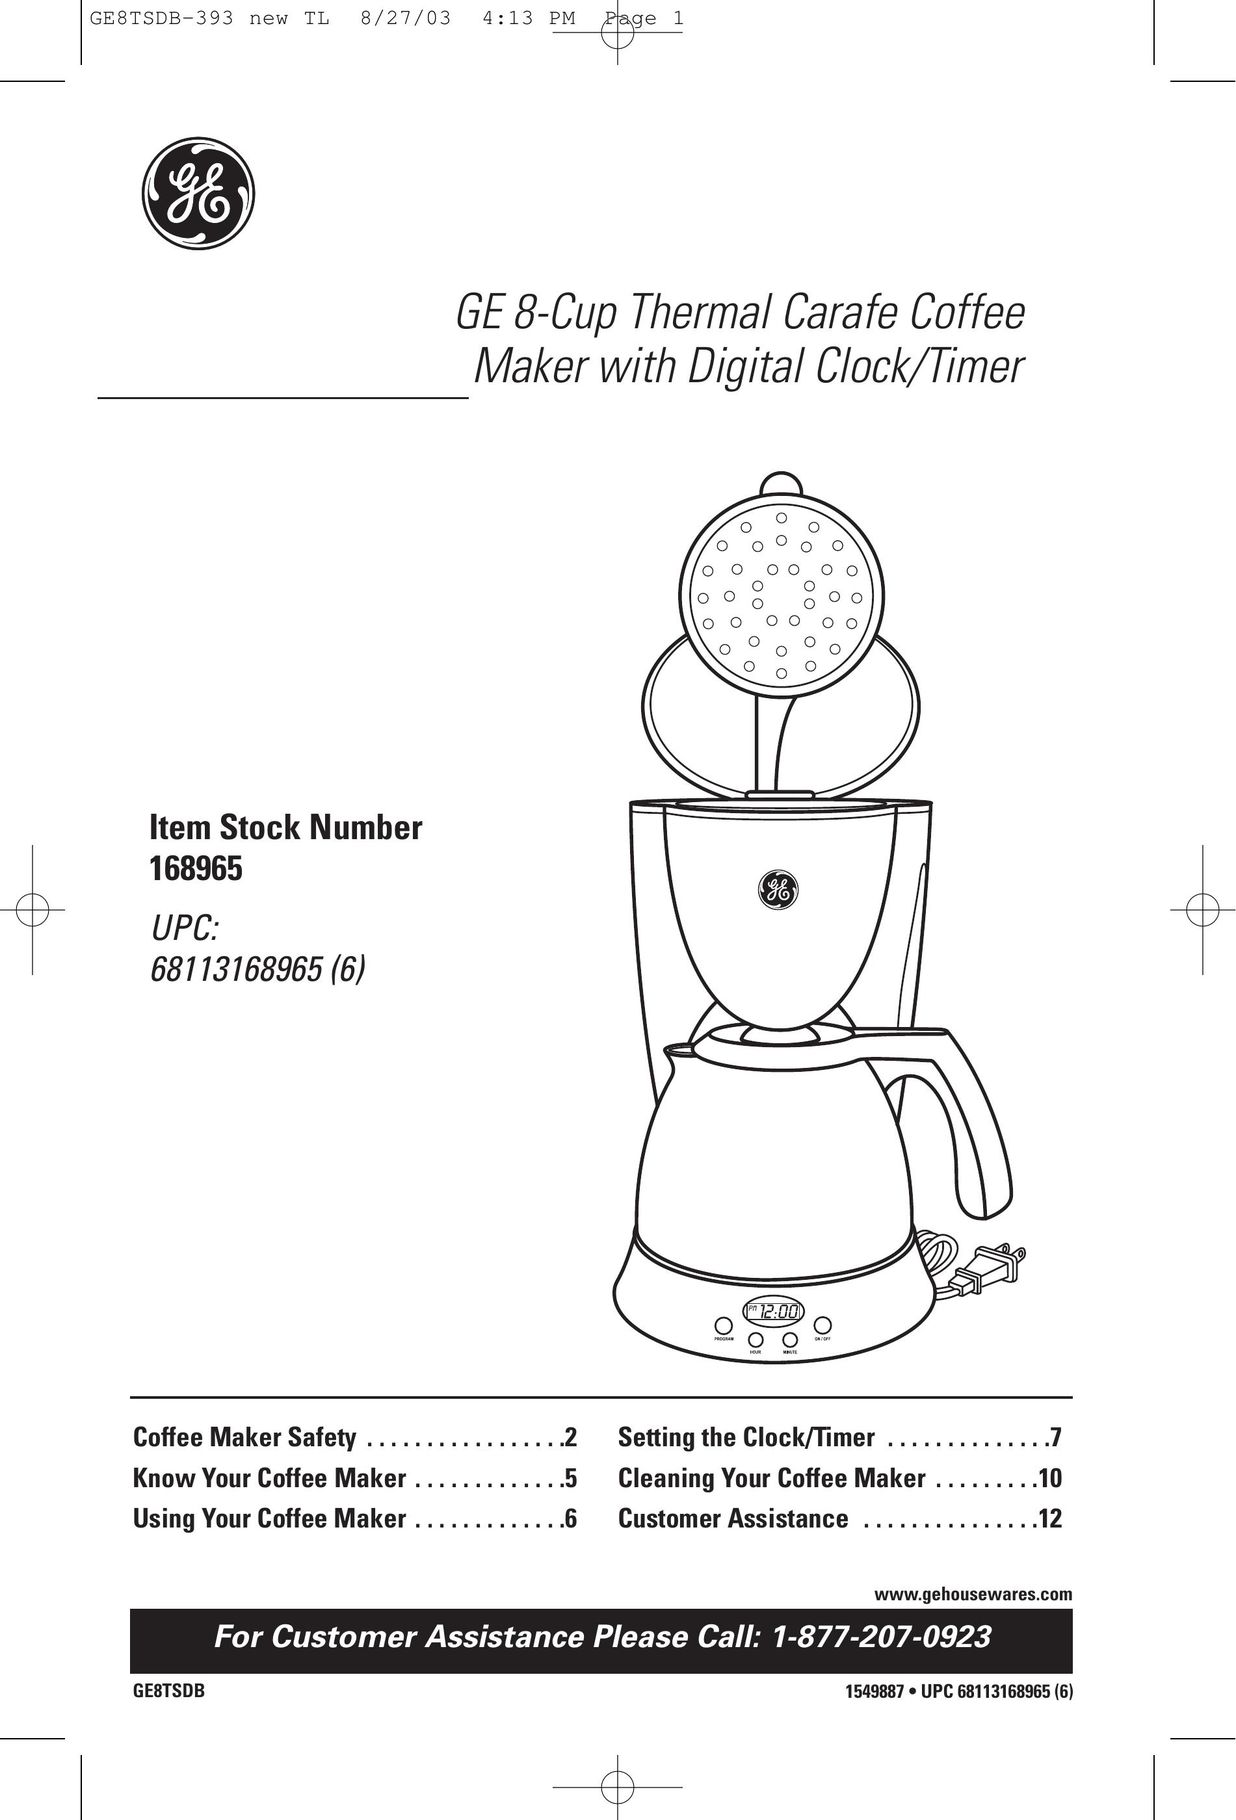 GE 68113168965 Coffeemaker User Manual